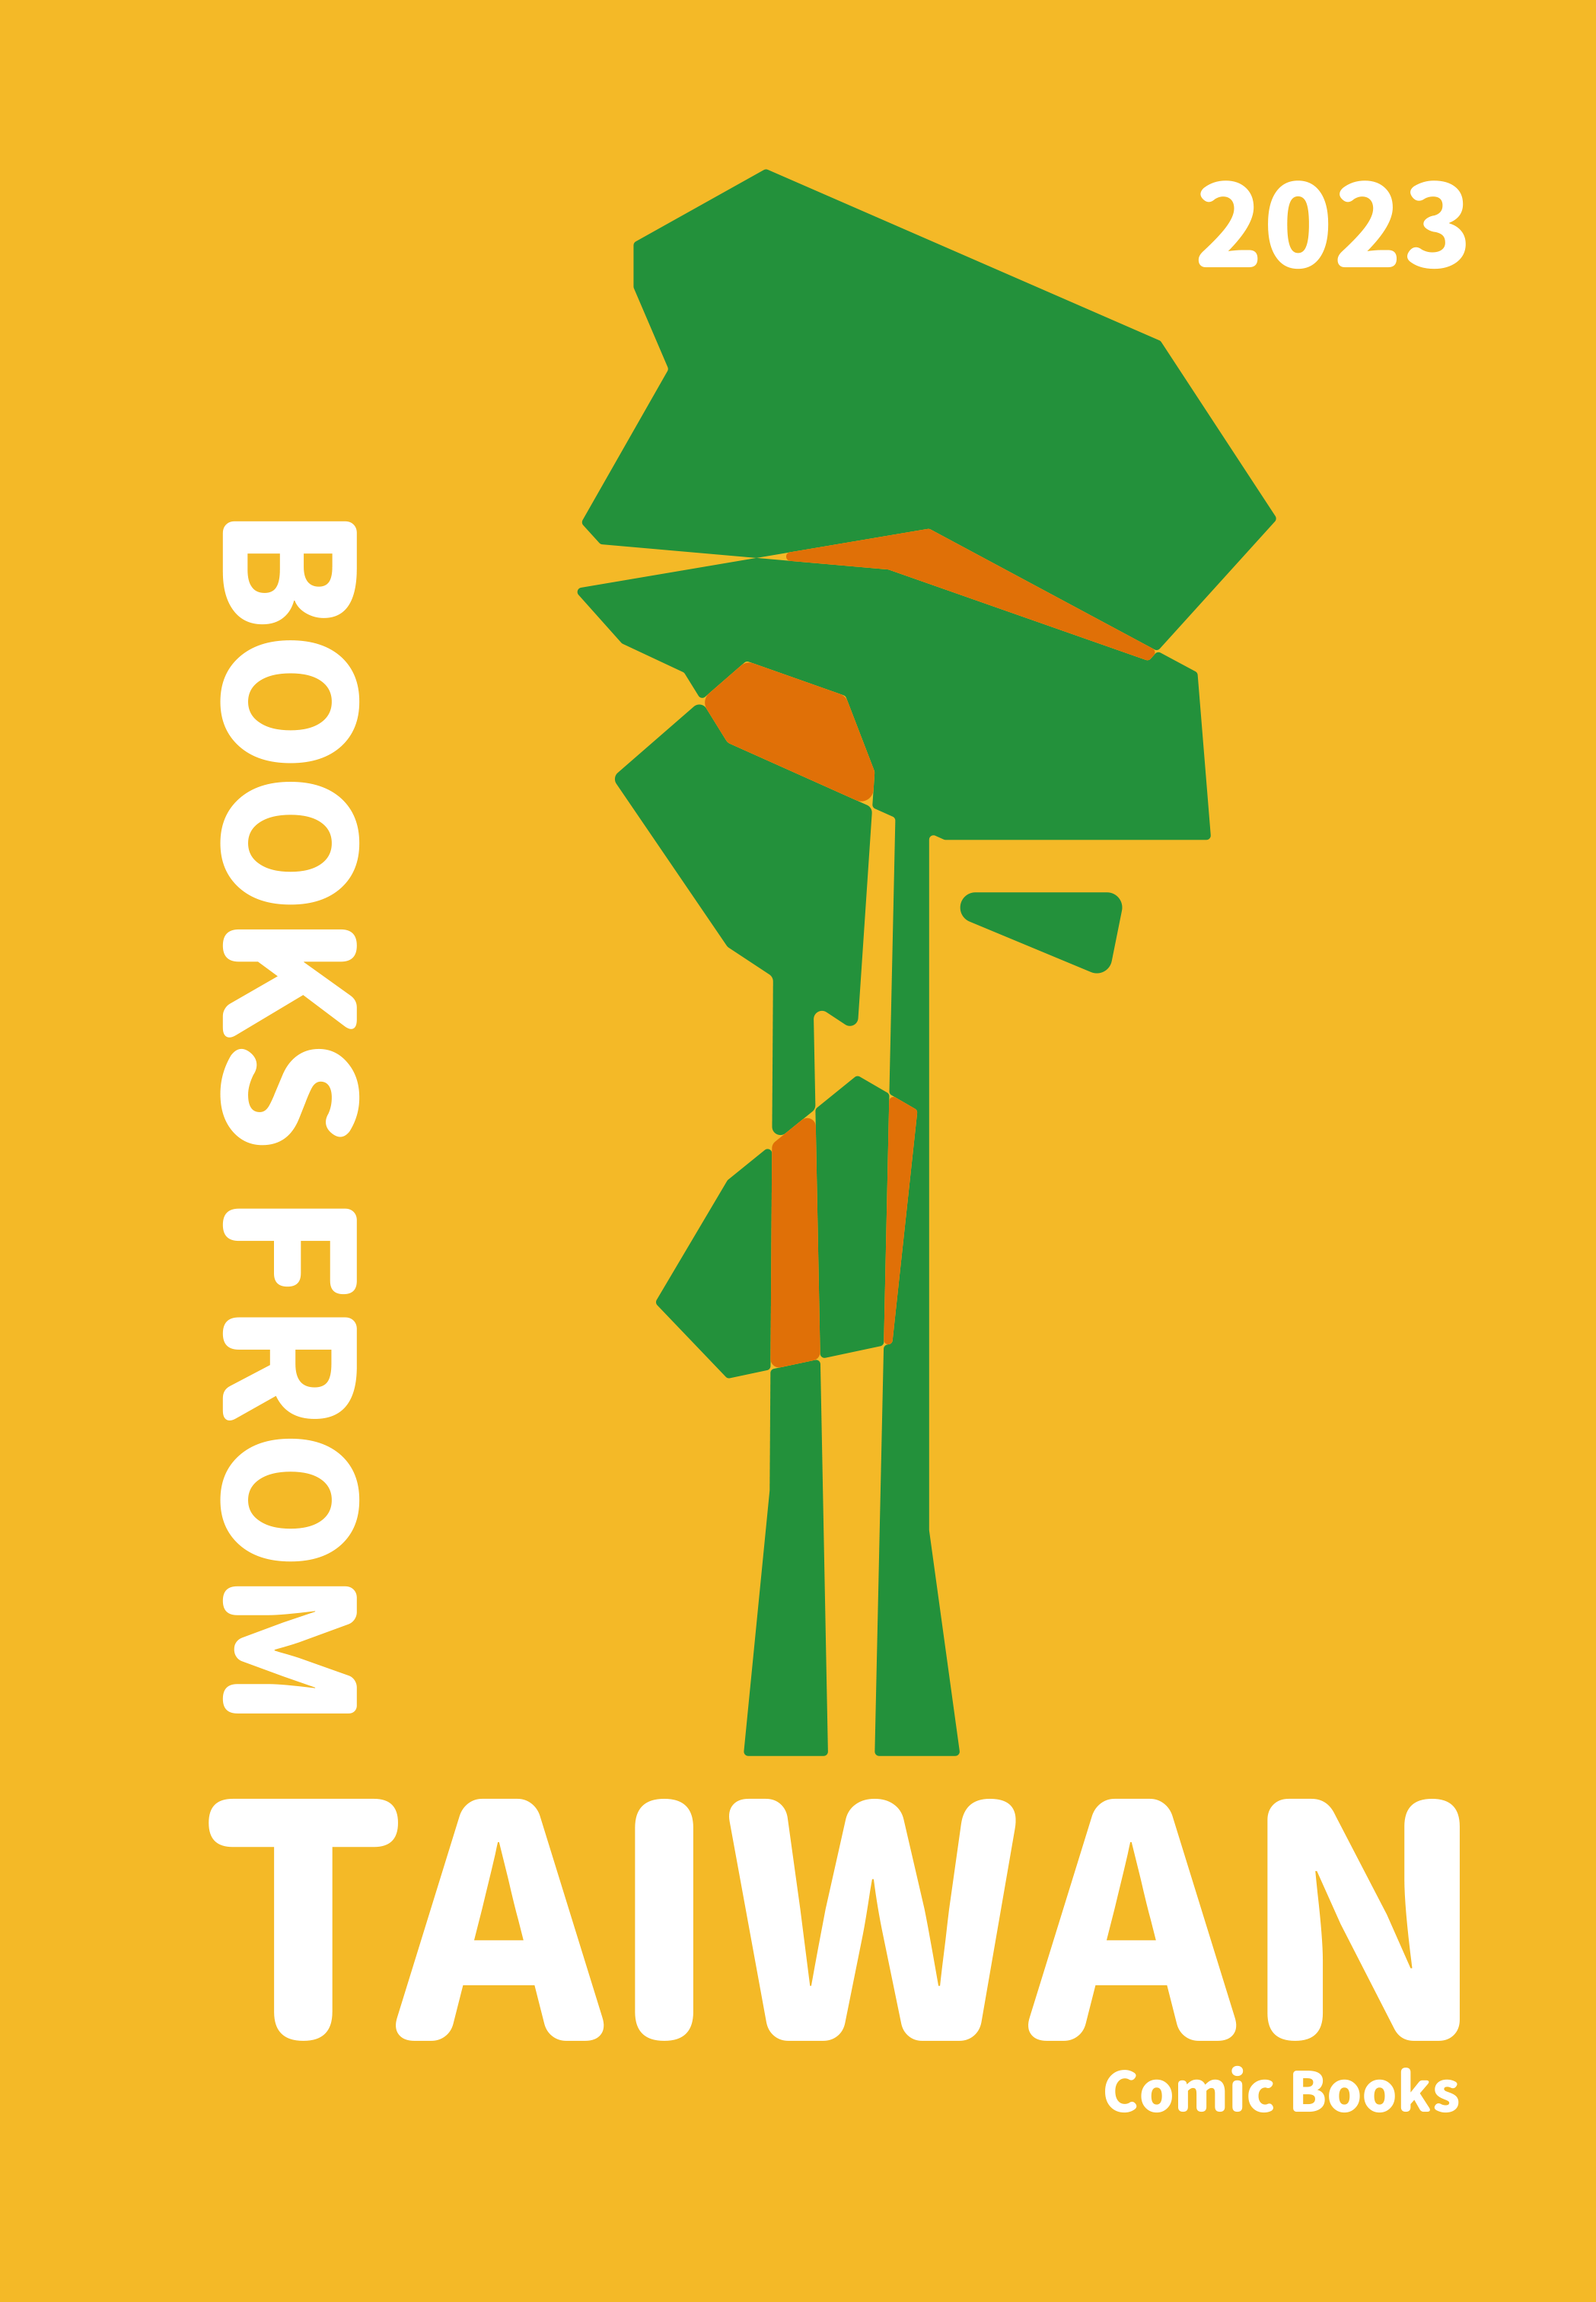 Books from Taiwan Comic Books 2023